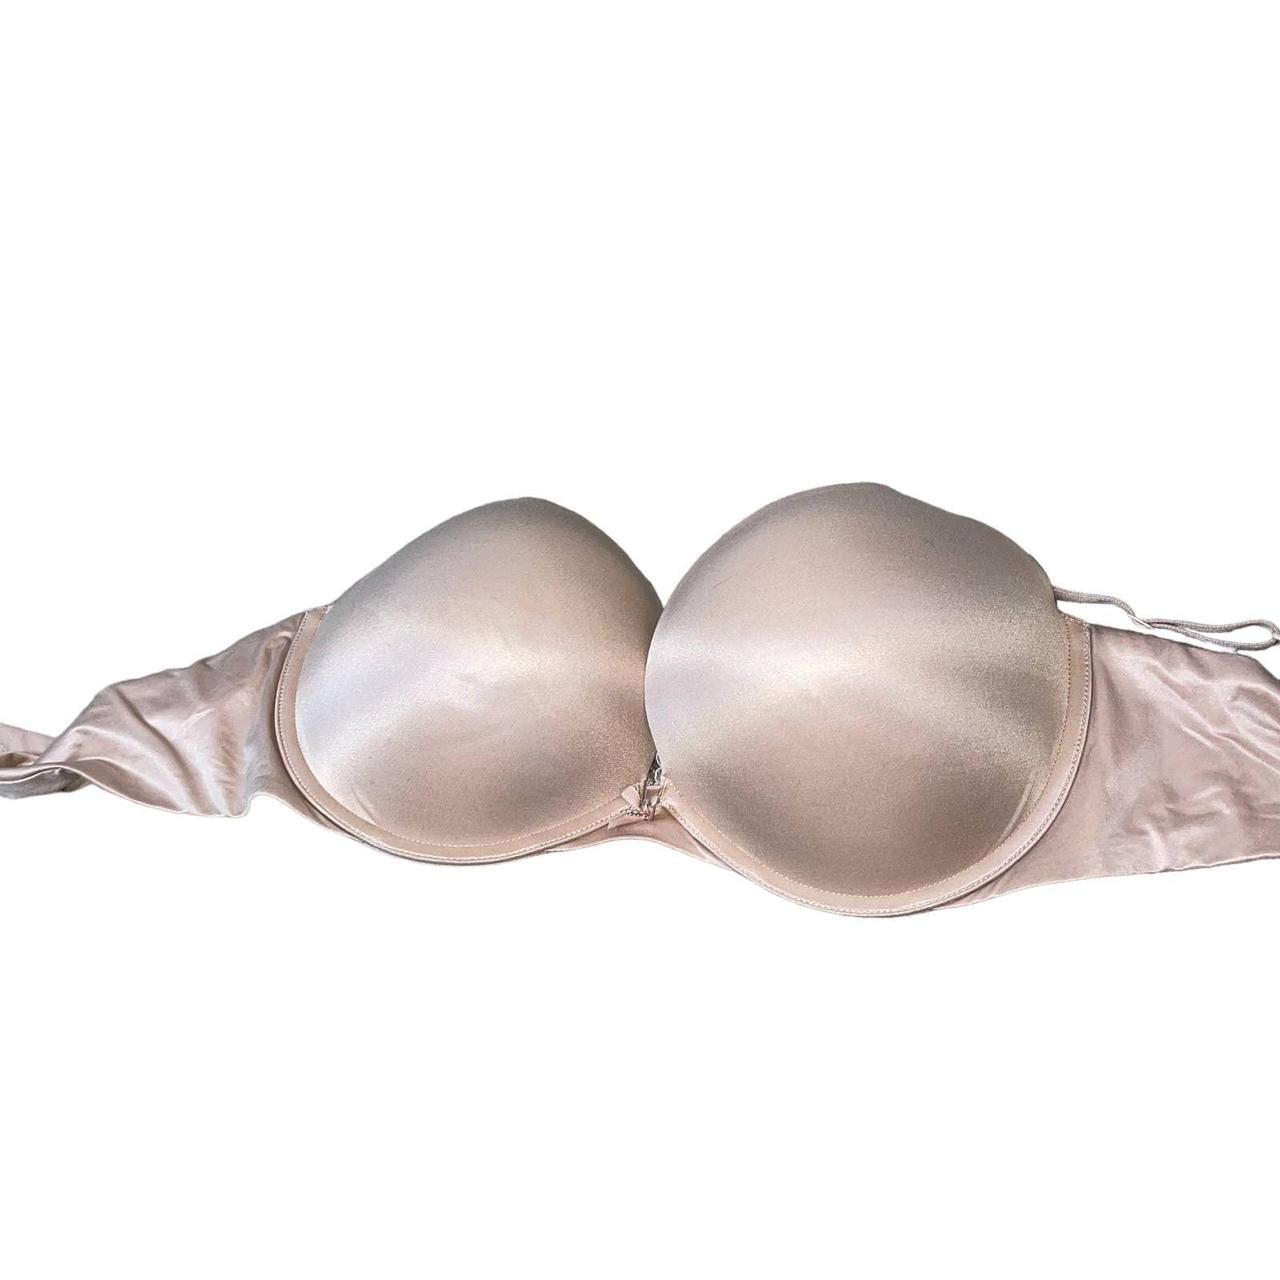 Victoria's Secret Push Up Bra - Size 36DD - Good Condition